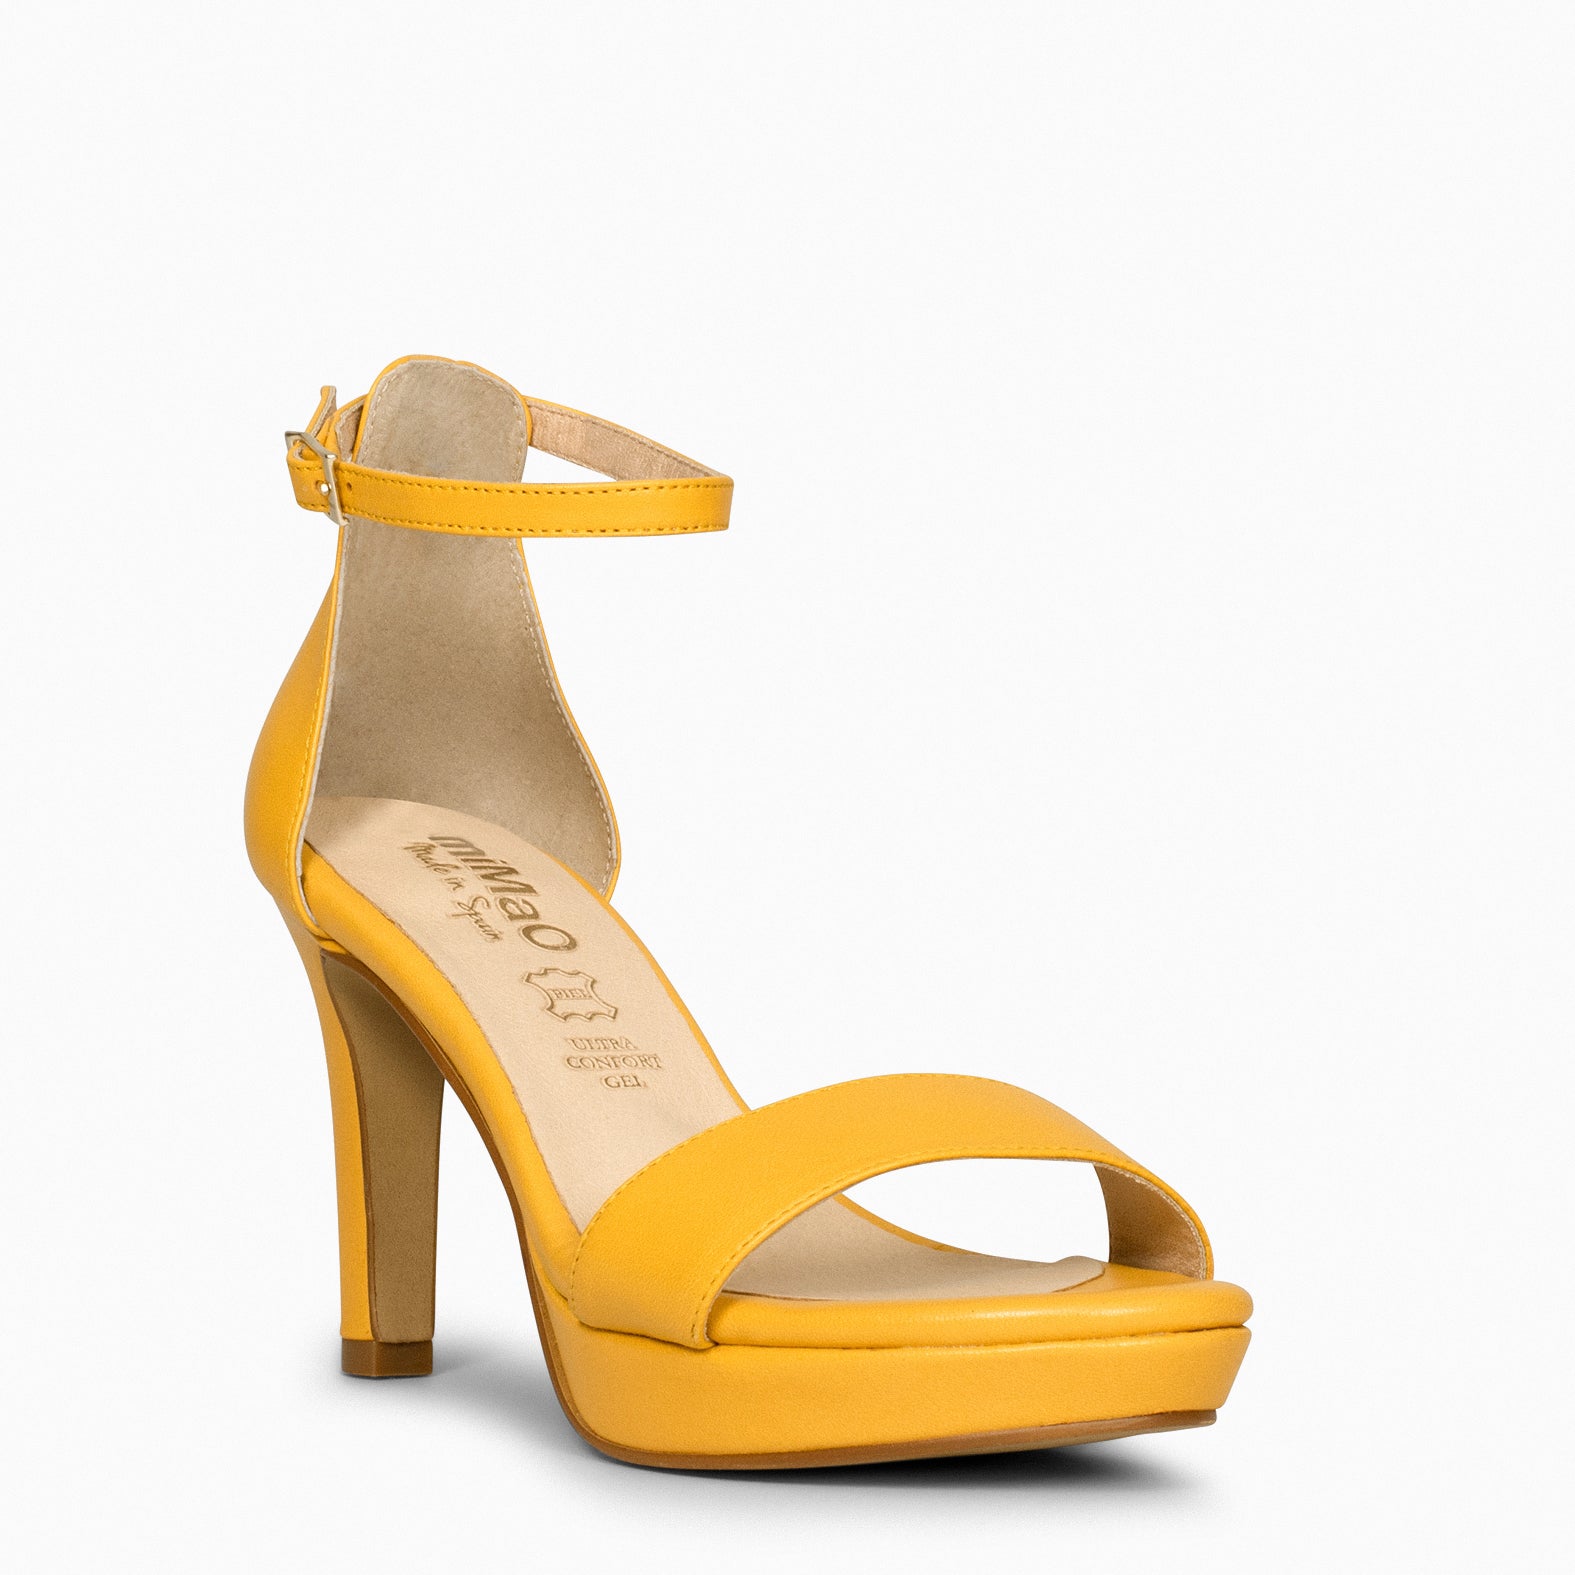 PARTY – YELLOW high-heeled platform sandals